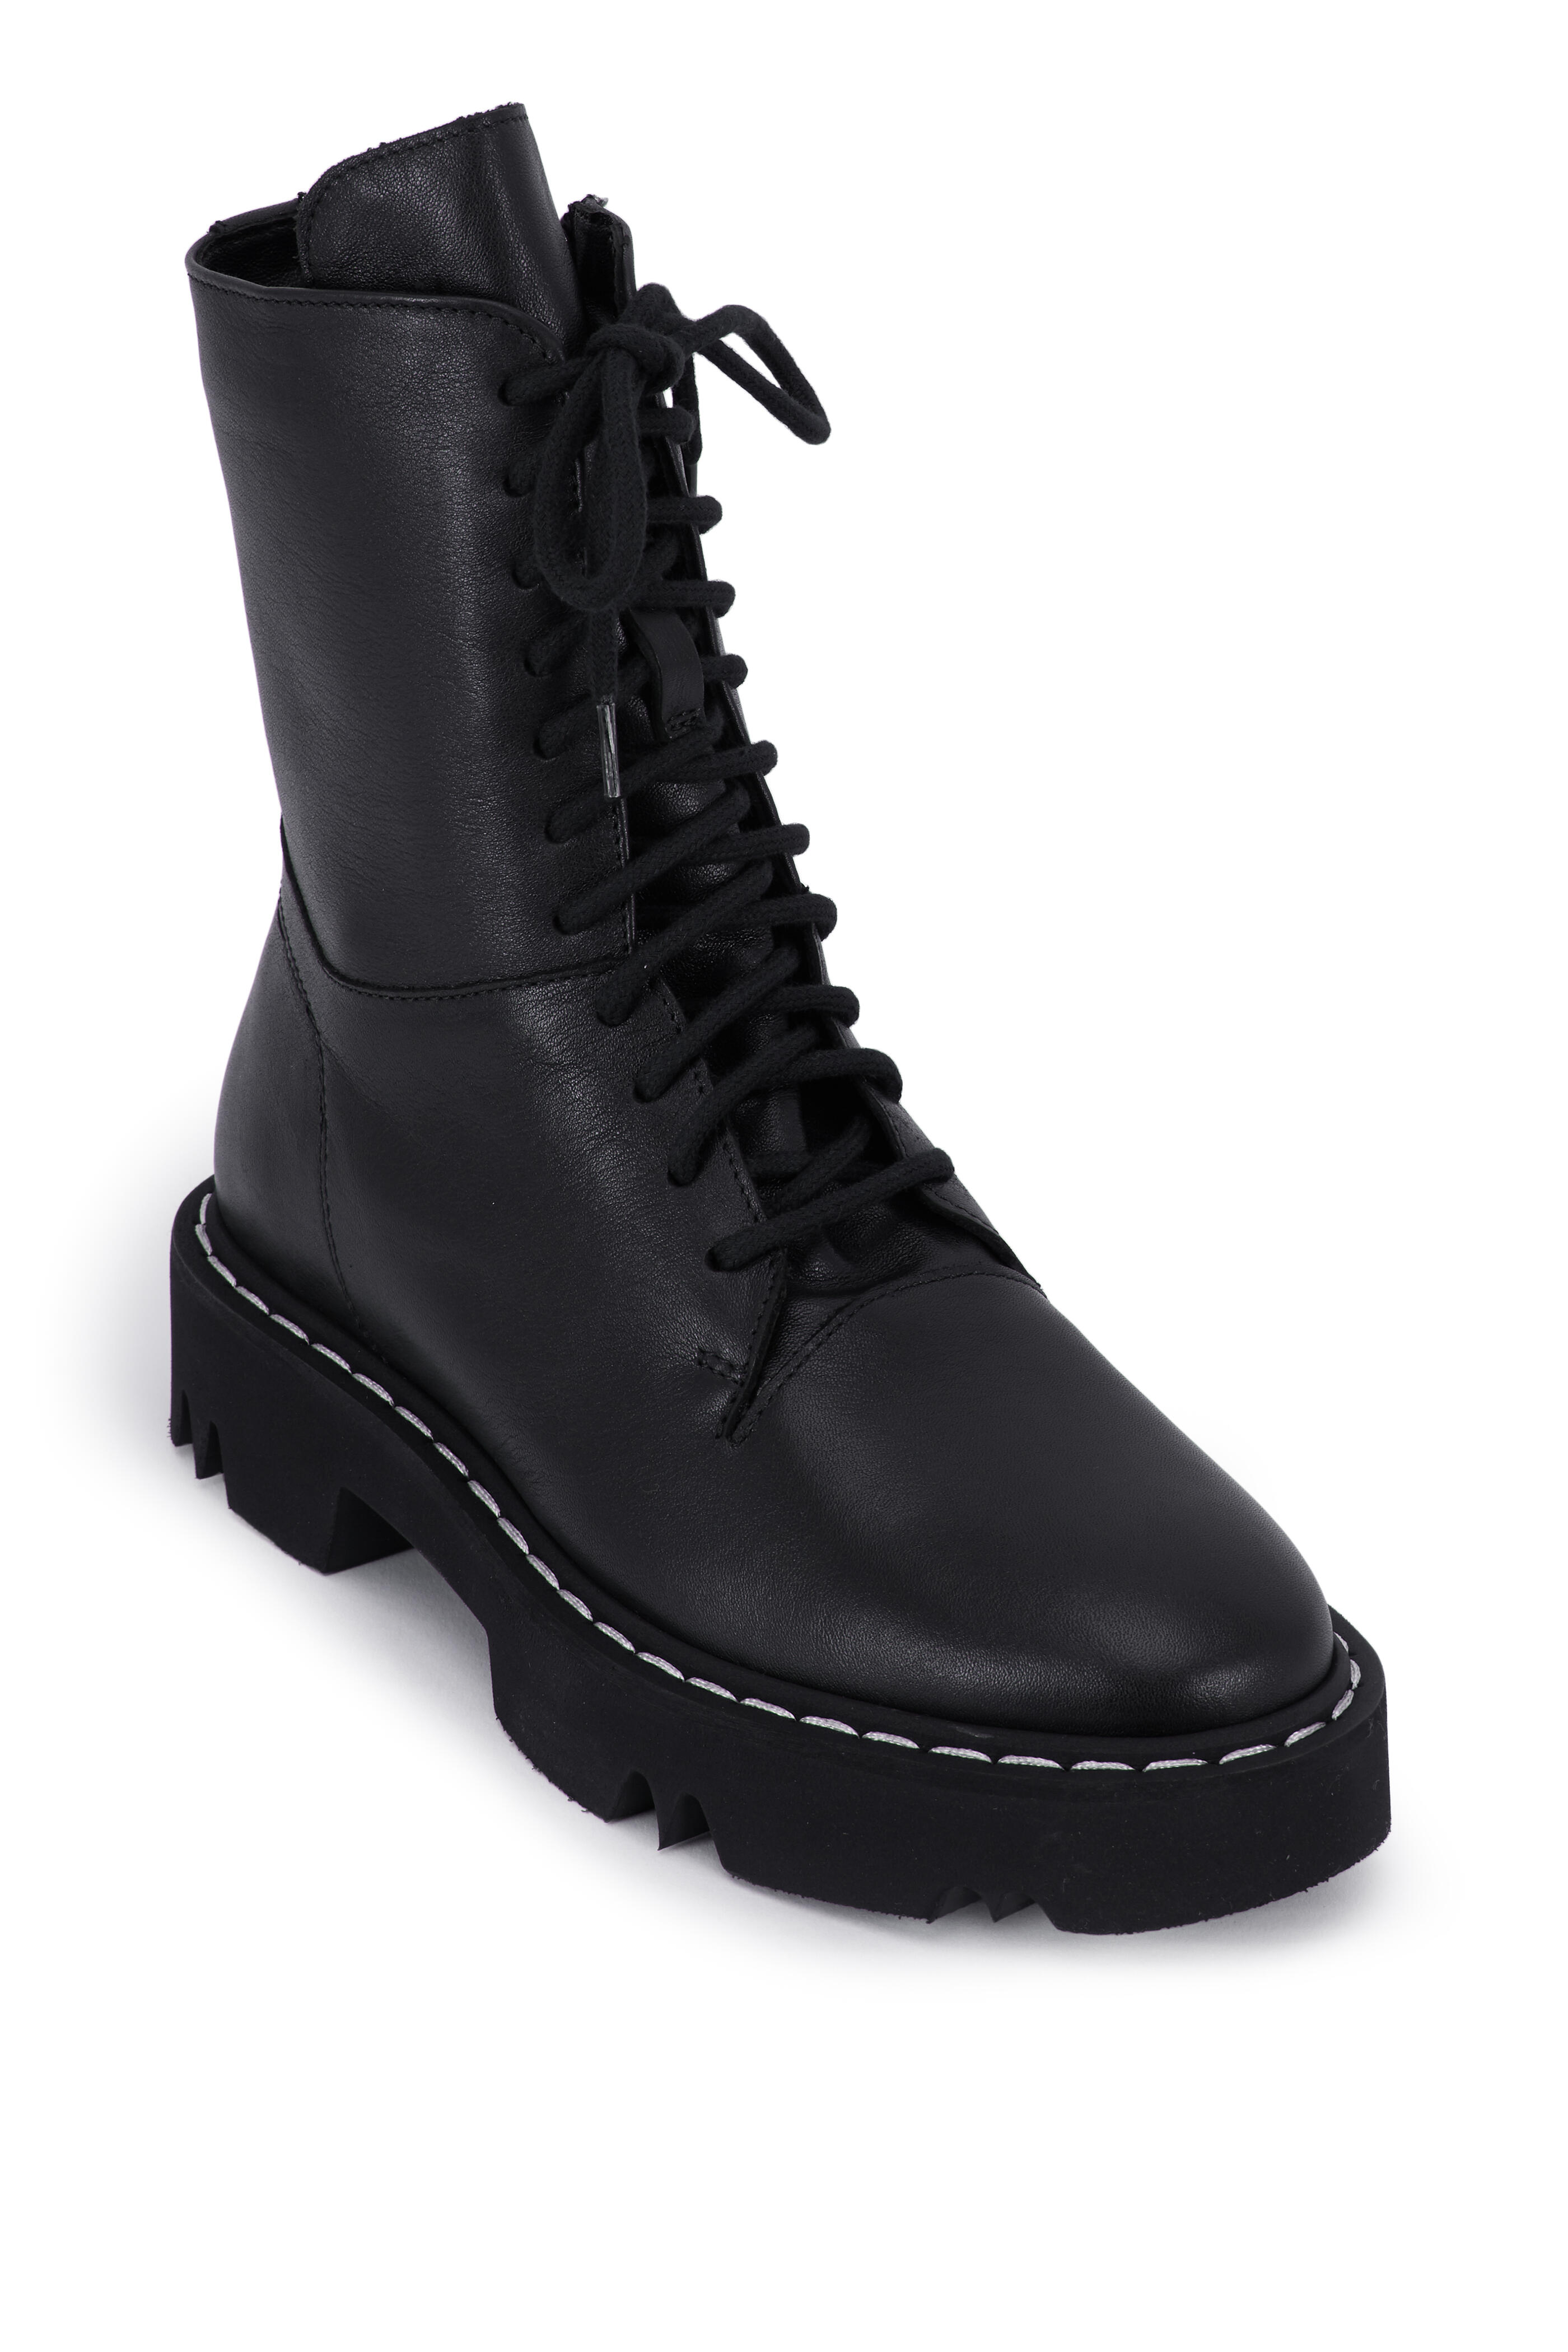 Aquatalia - Hana Black Leather Lace Up Combat Boot